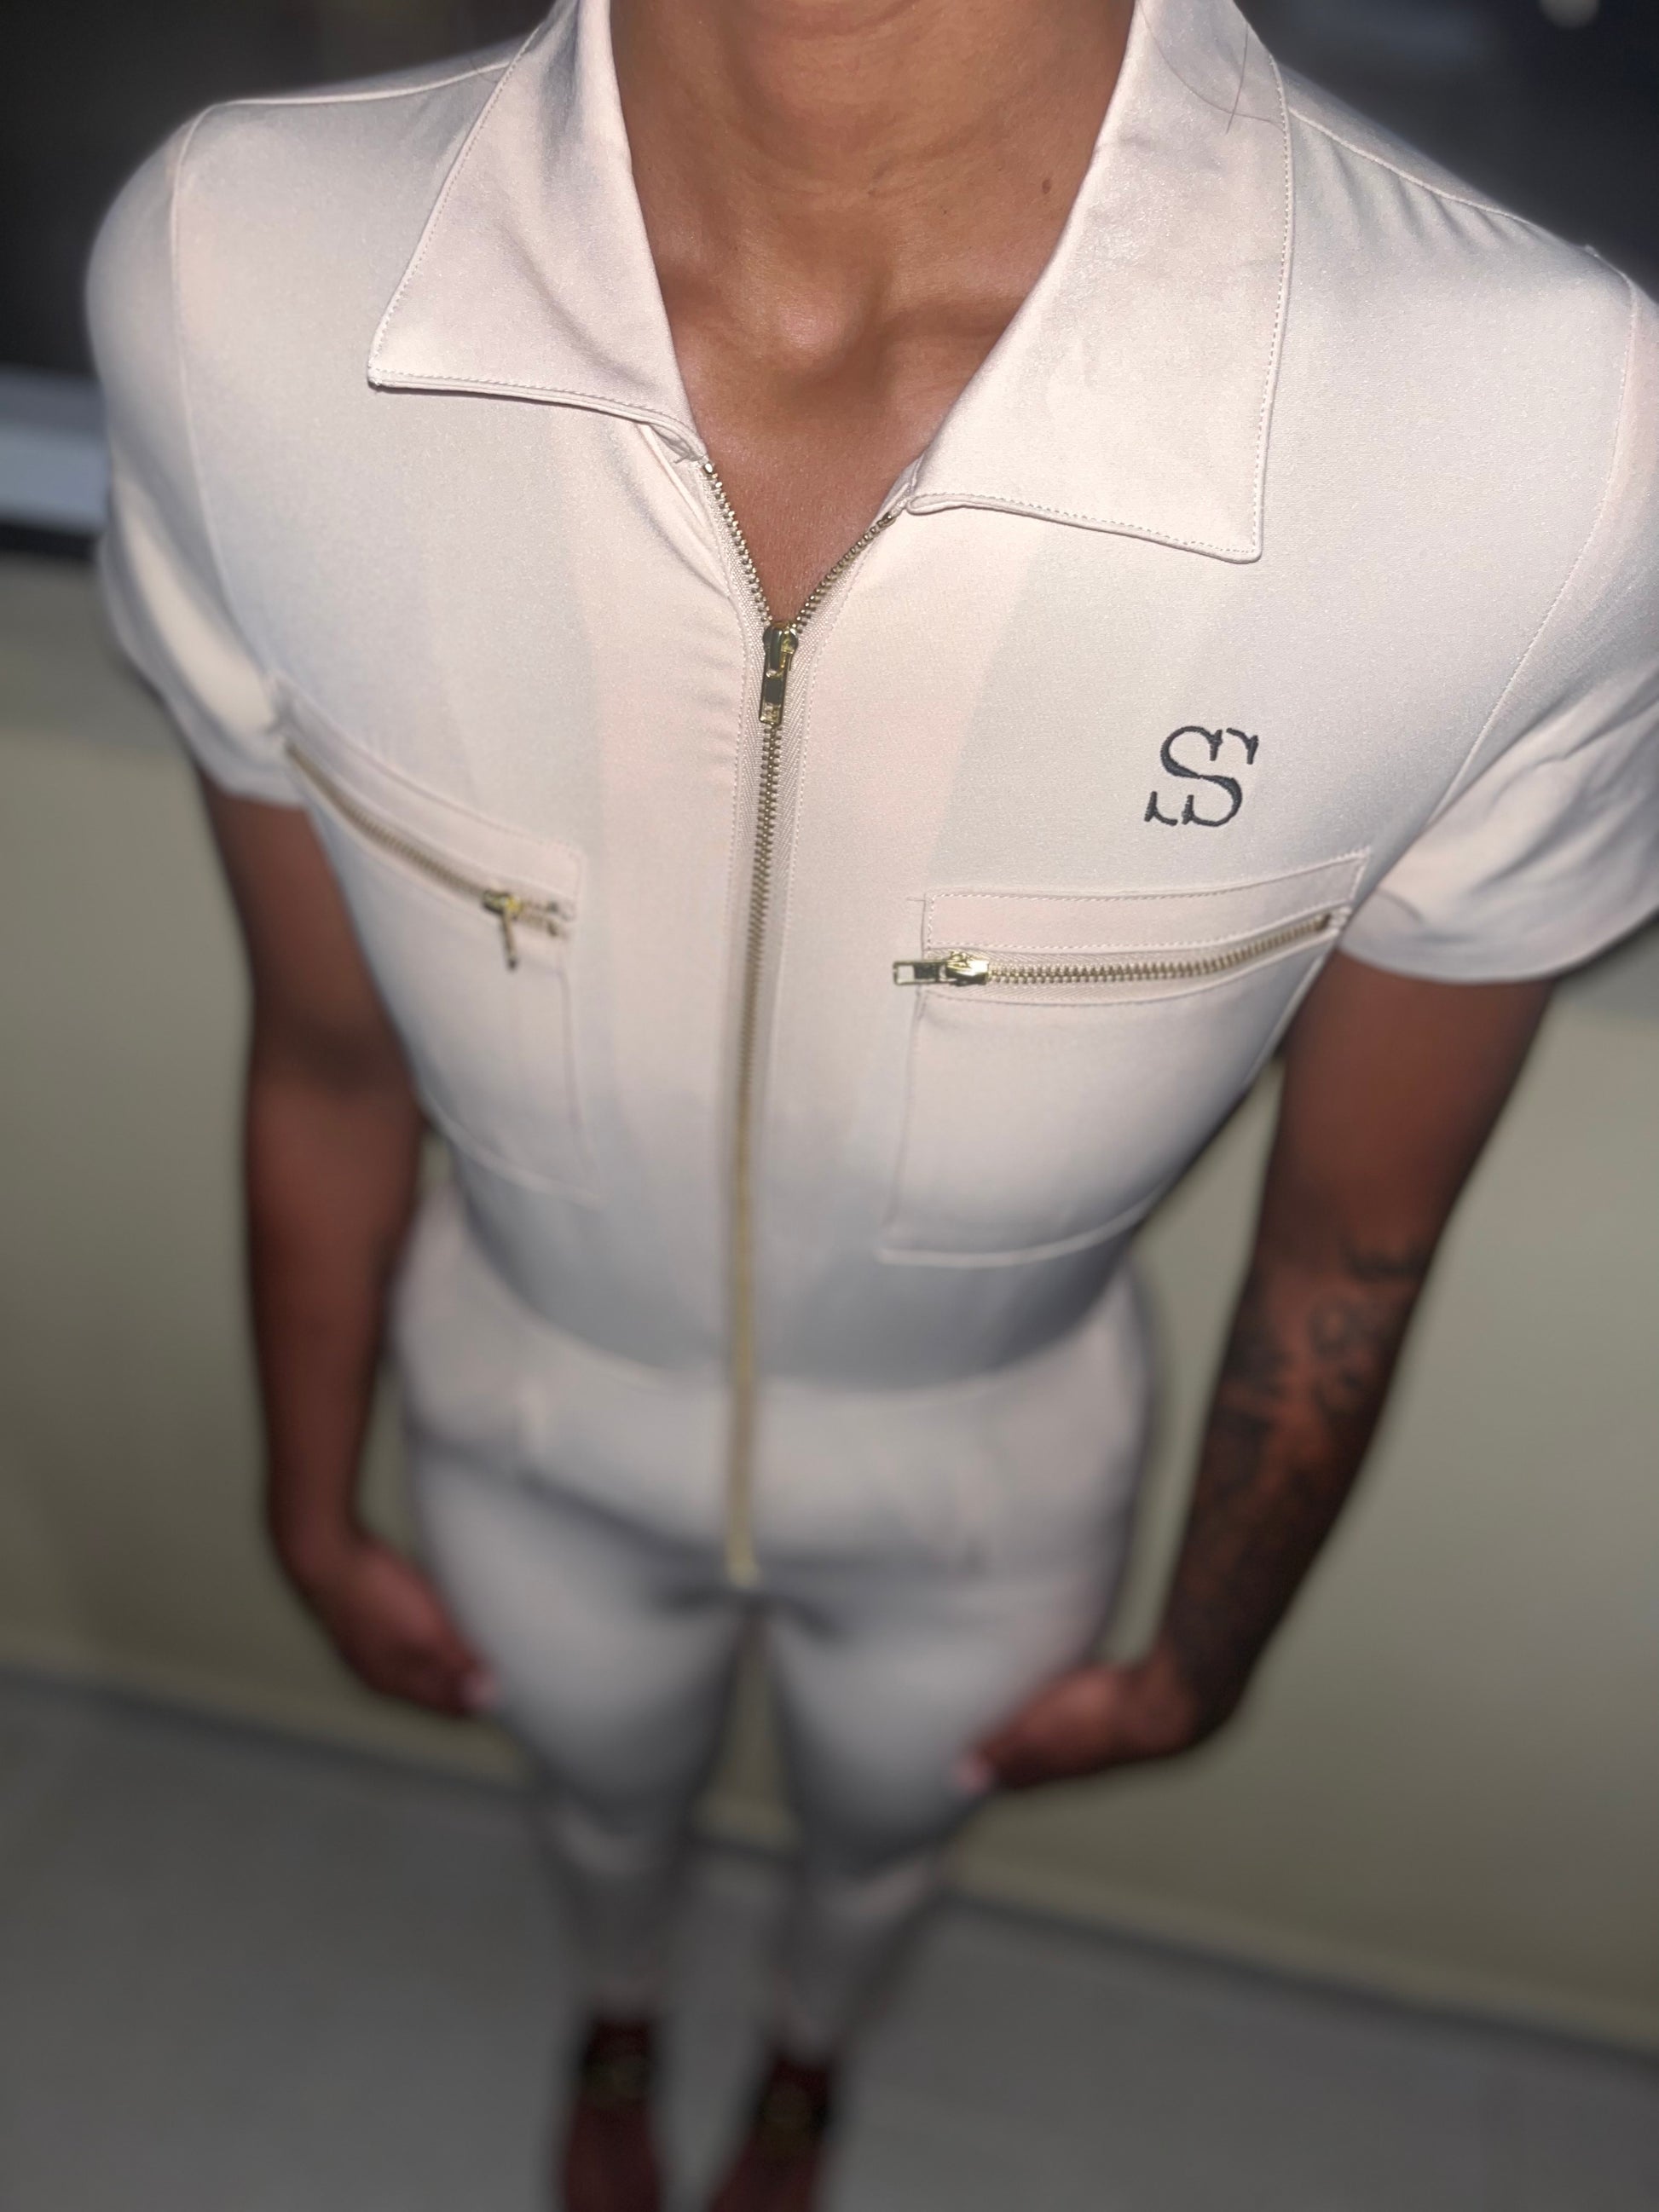 Deluxe jumpsuit in beige 🔥 - [Swanky sets